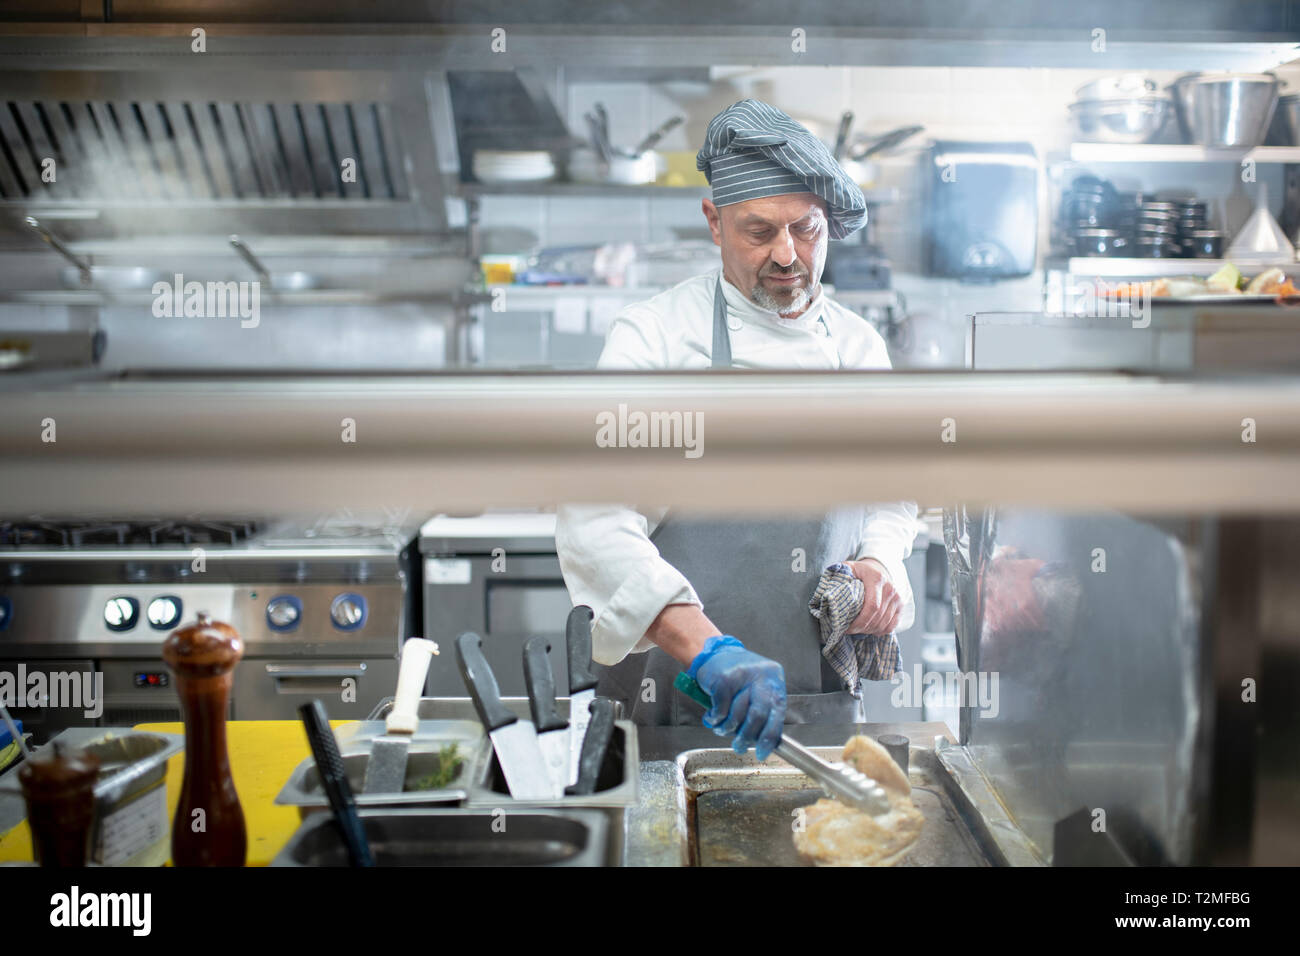 Chef cooking in Italian restaurant kitchen Stock Photo